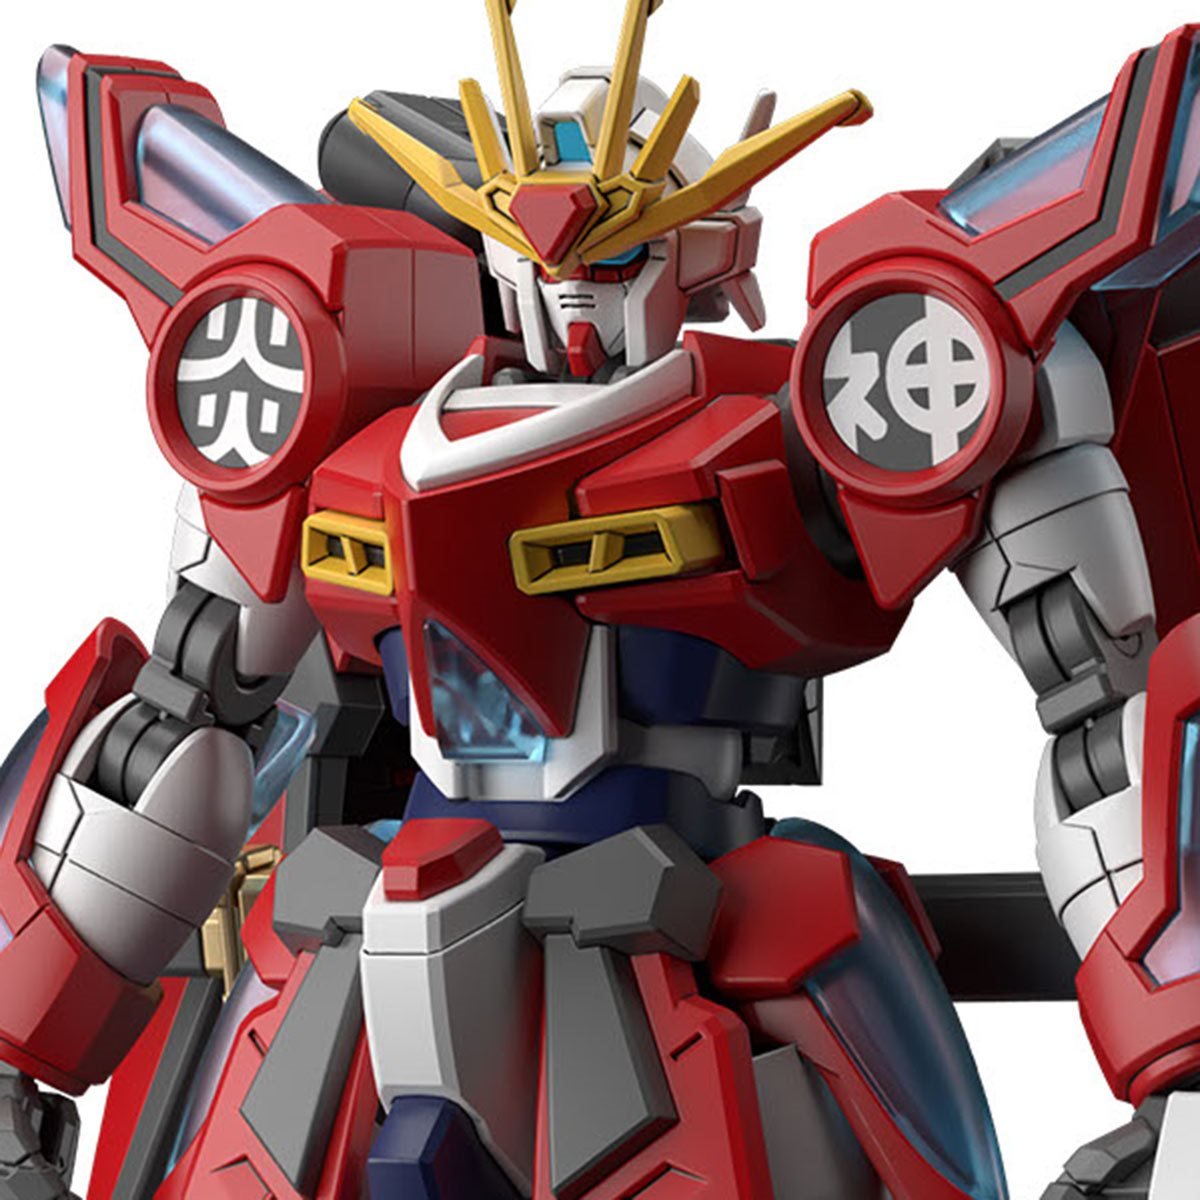 Maquette Gundam EG 1/144 LAH Gundam